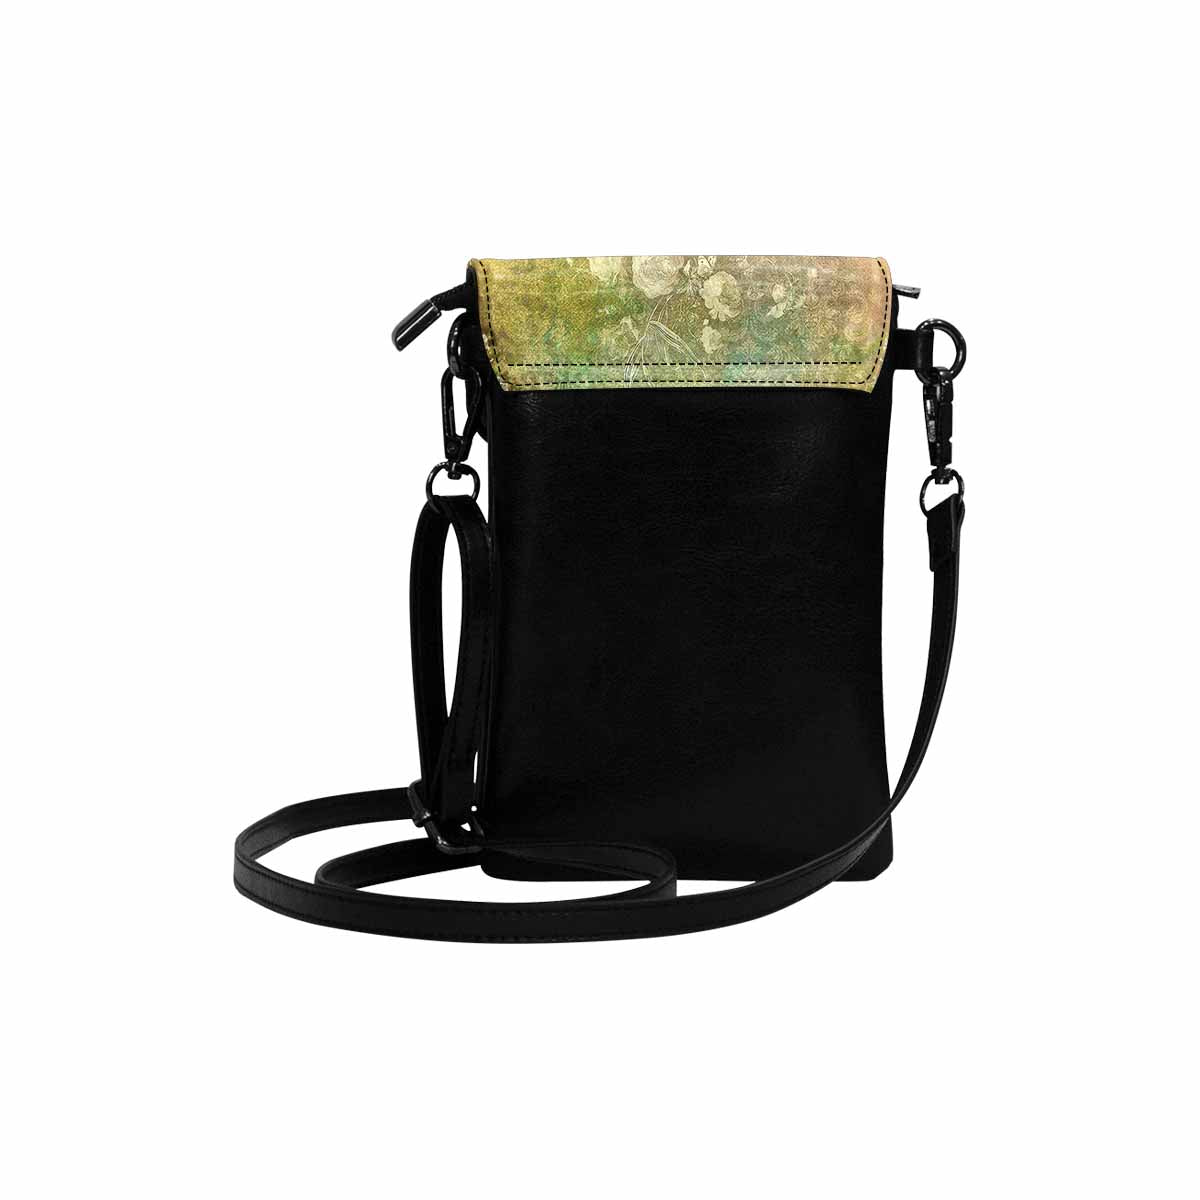 General Victorian cell phone purse, mobile purse, Design 09